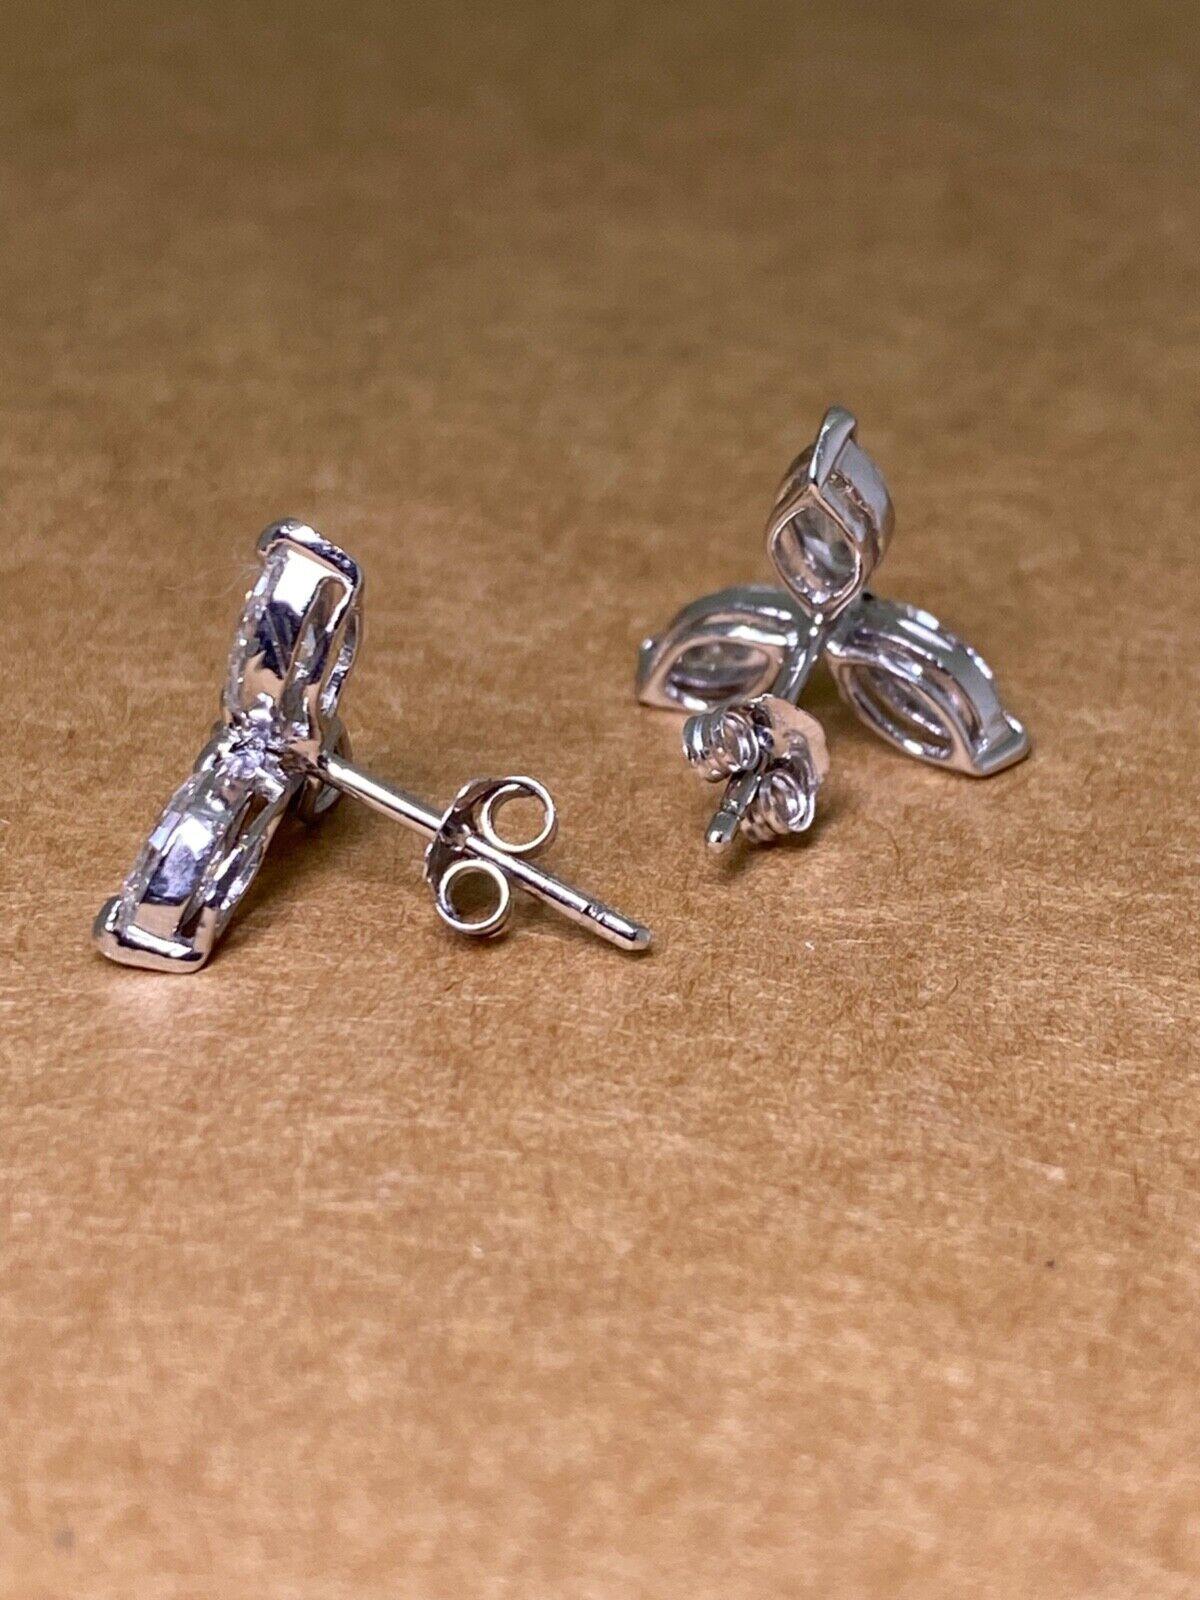 Superb 3-Petal Flower Marquise Cut Diamond (1.40ct) Stud Earrings in Platinum  For Sale 1